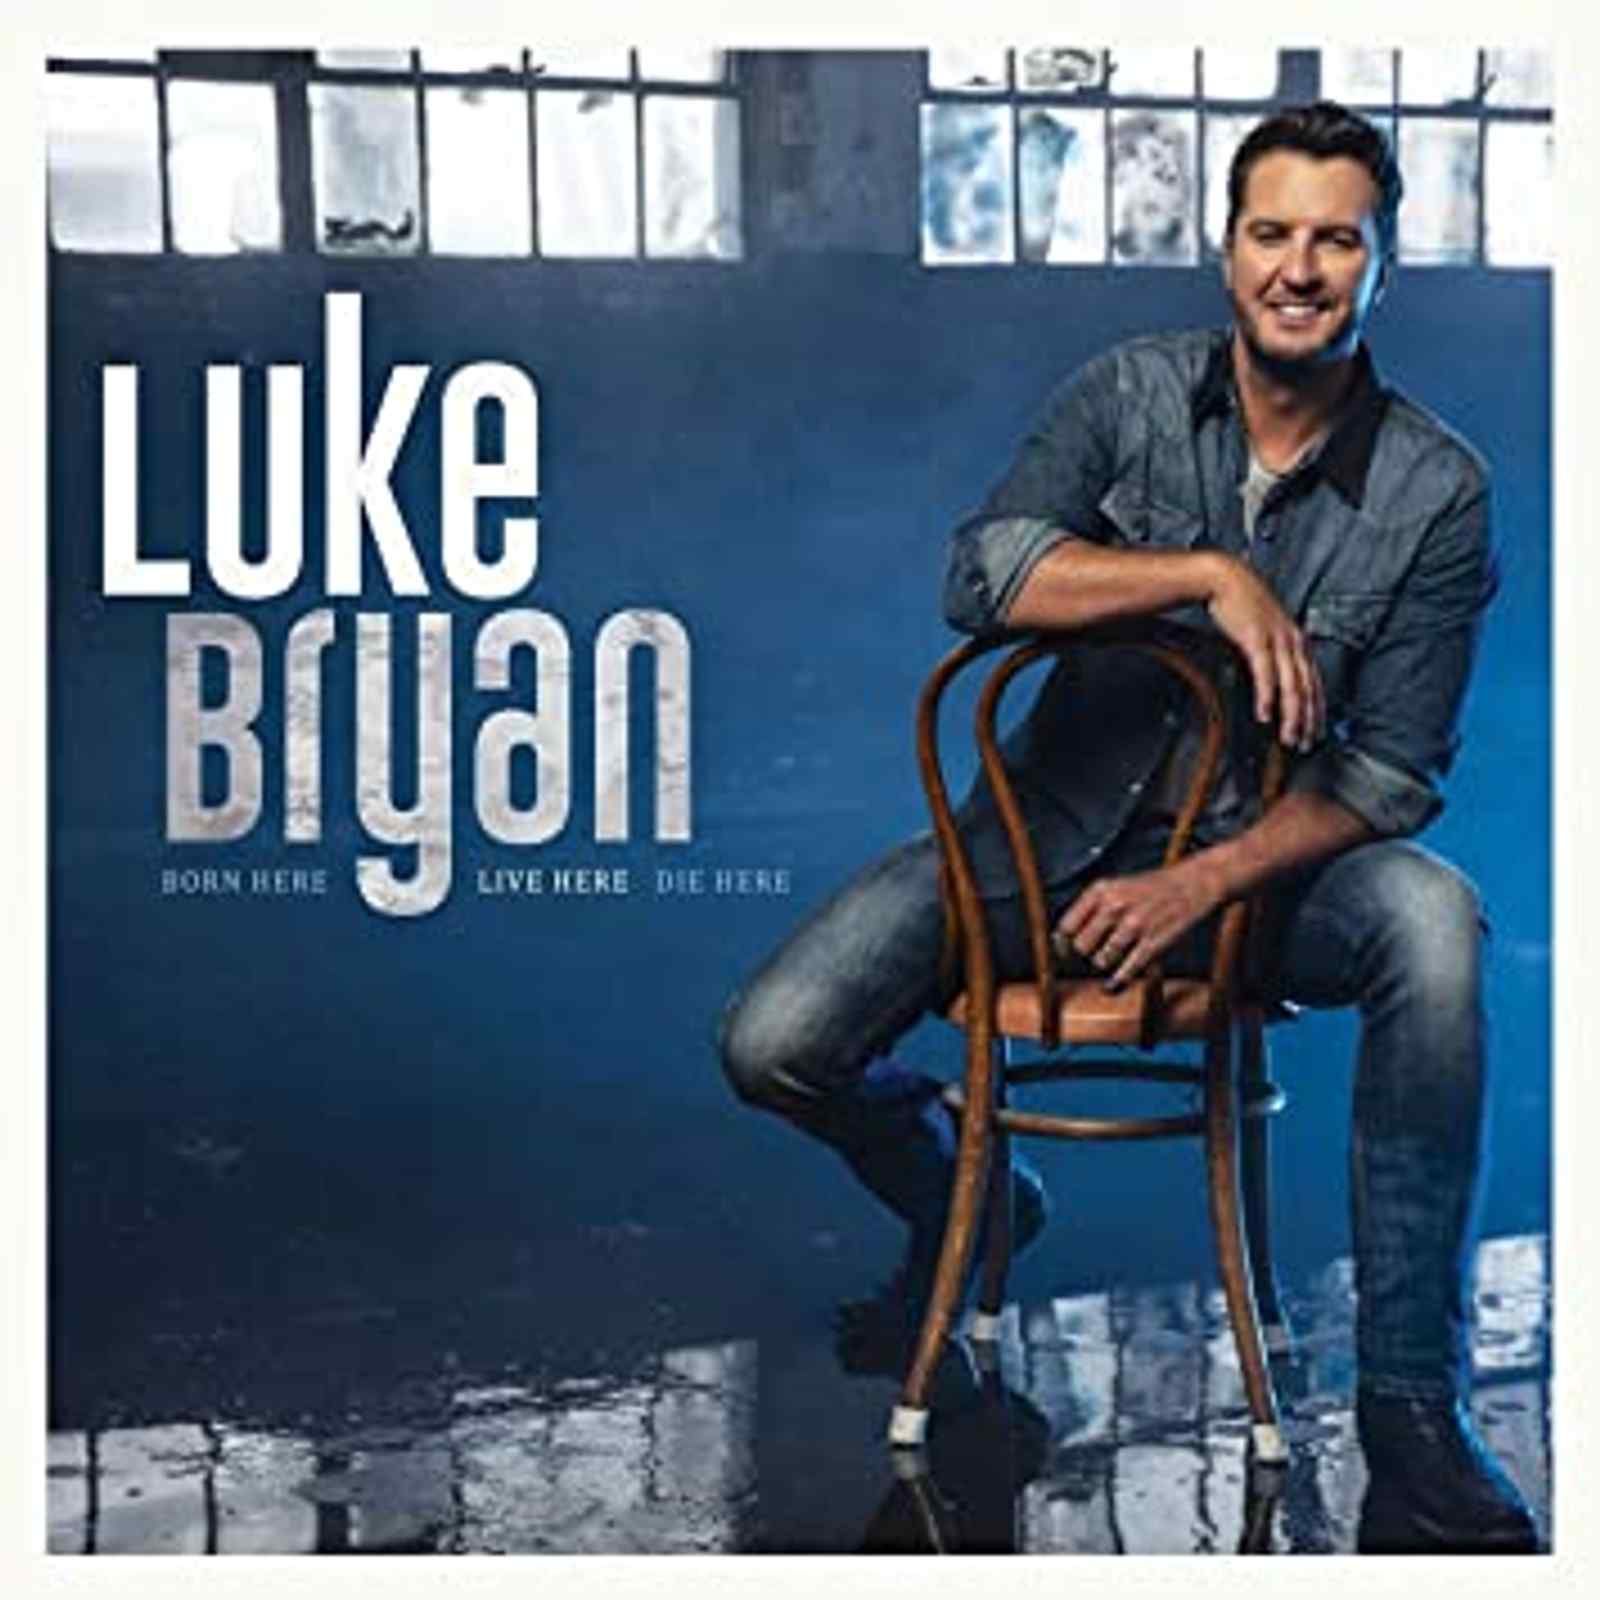 Album Release: Born Here Live Here Die Here by Luke Bryan